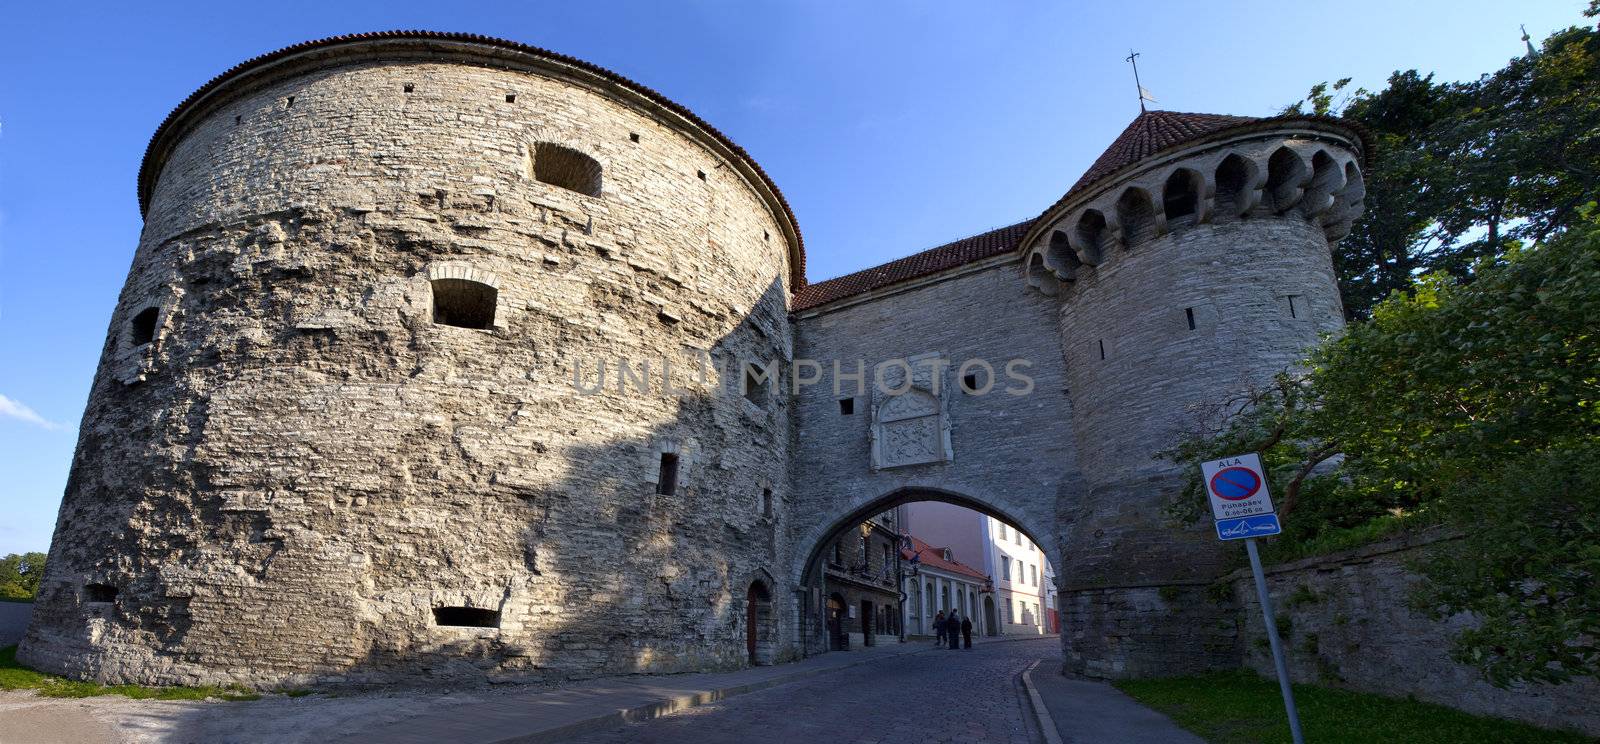 Tallinn Stadttor (City Gate) by chrisdorney